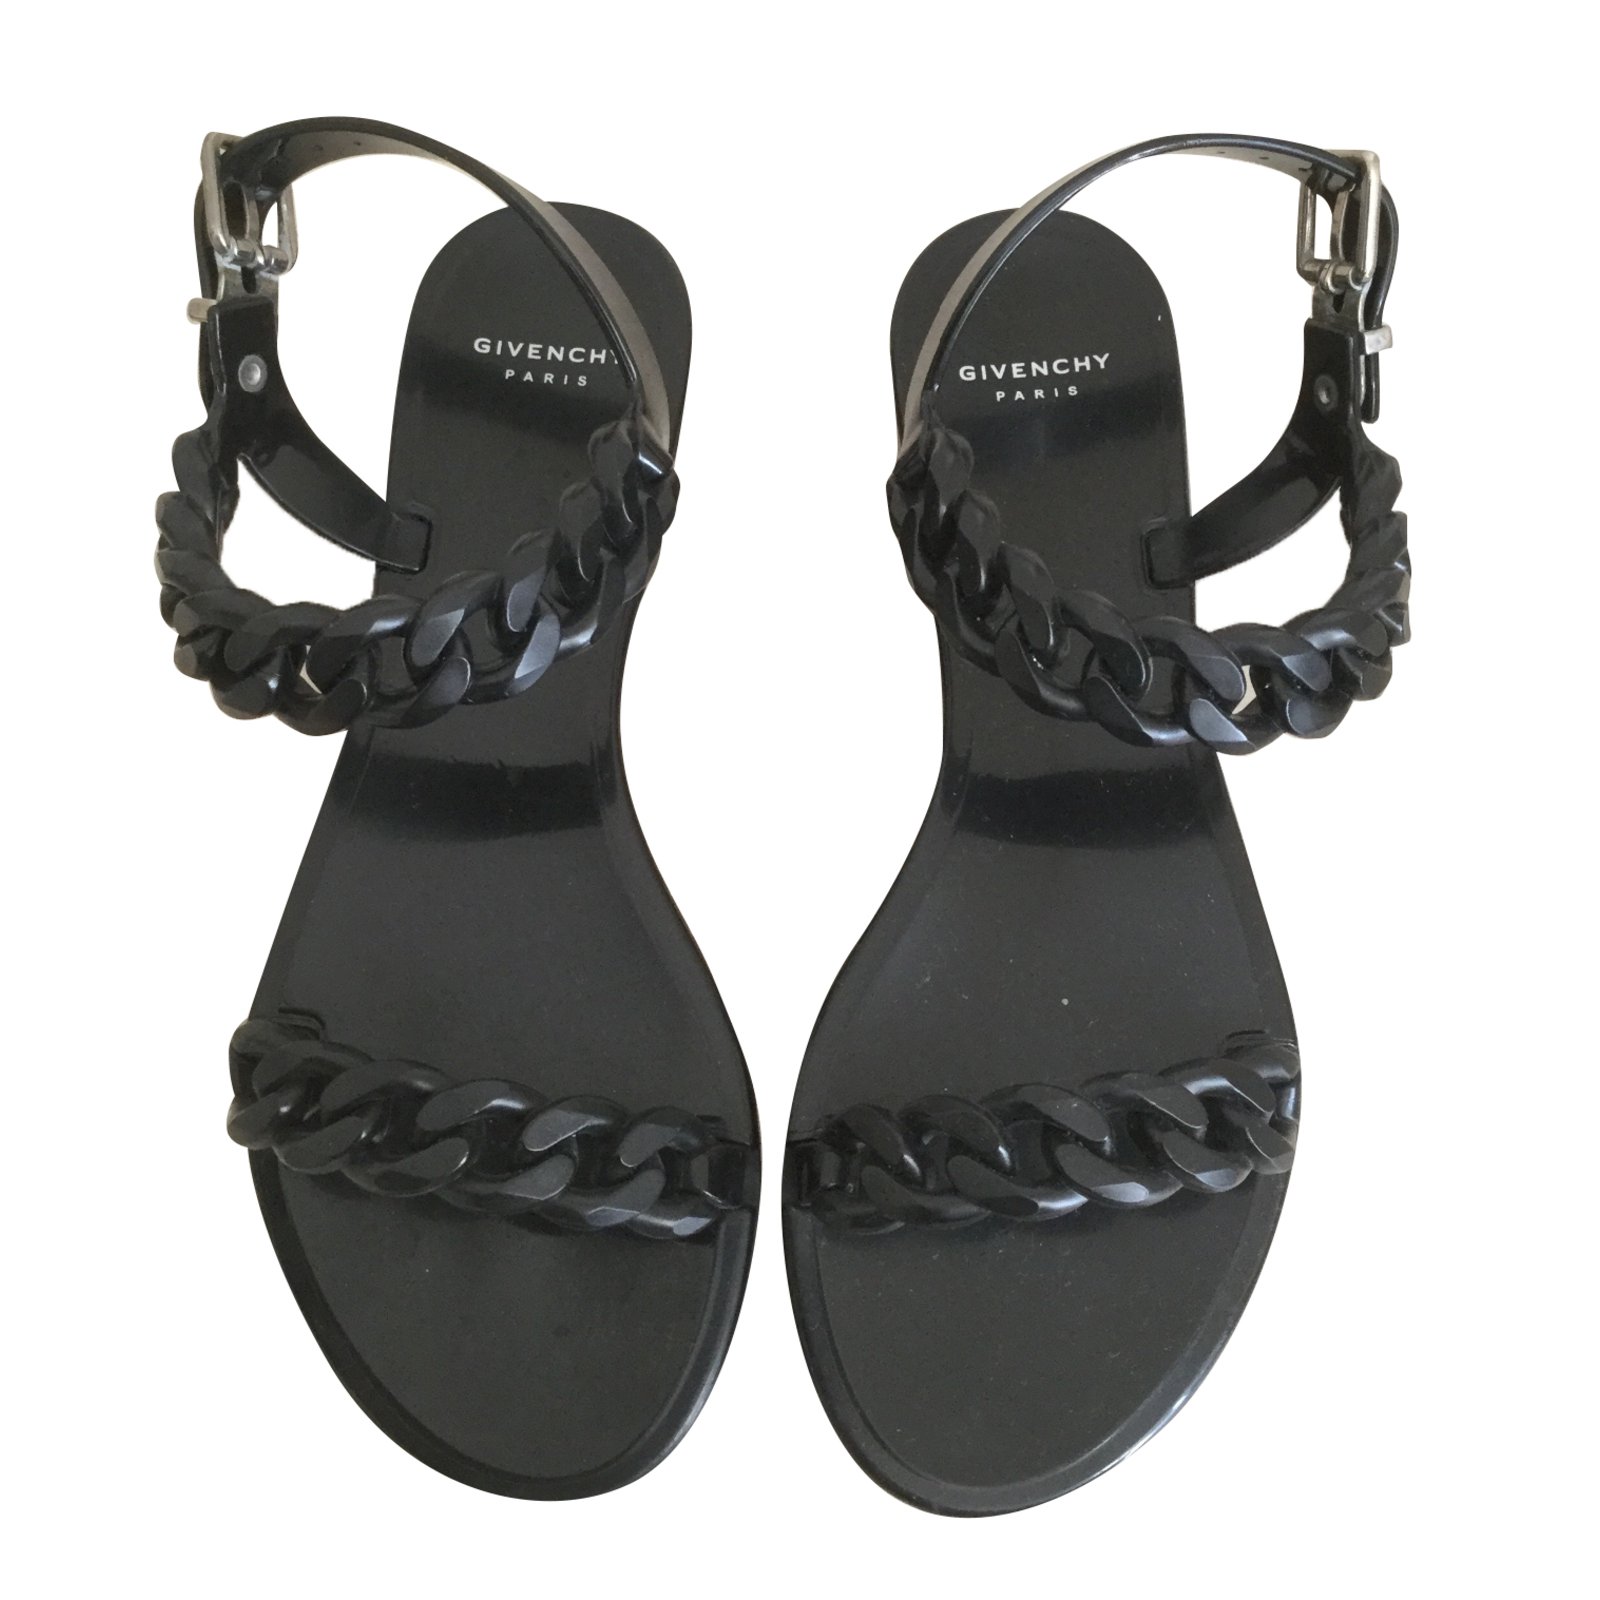 Givenchy sandals Sandals Rubber Black 